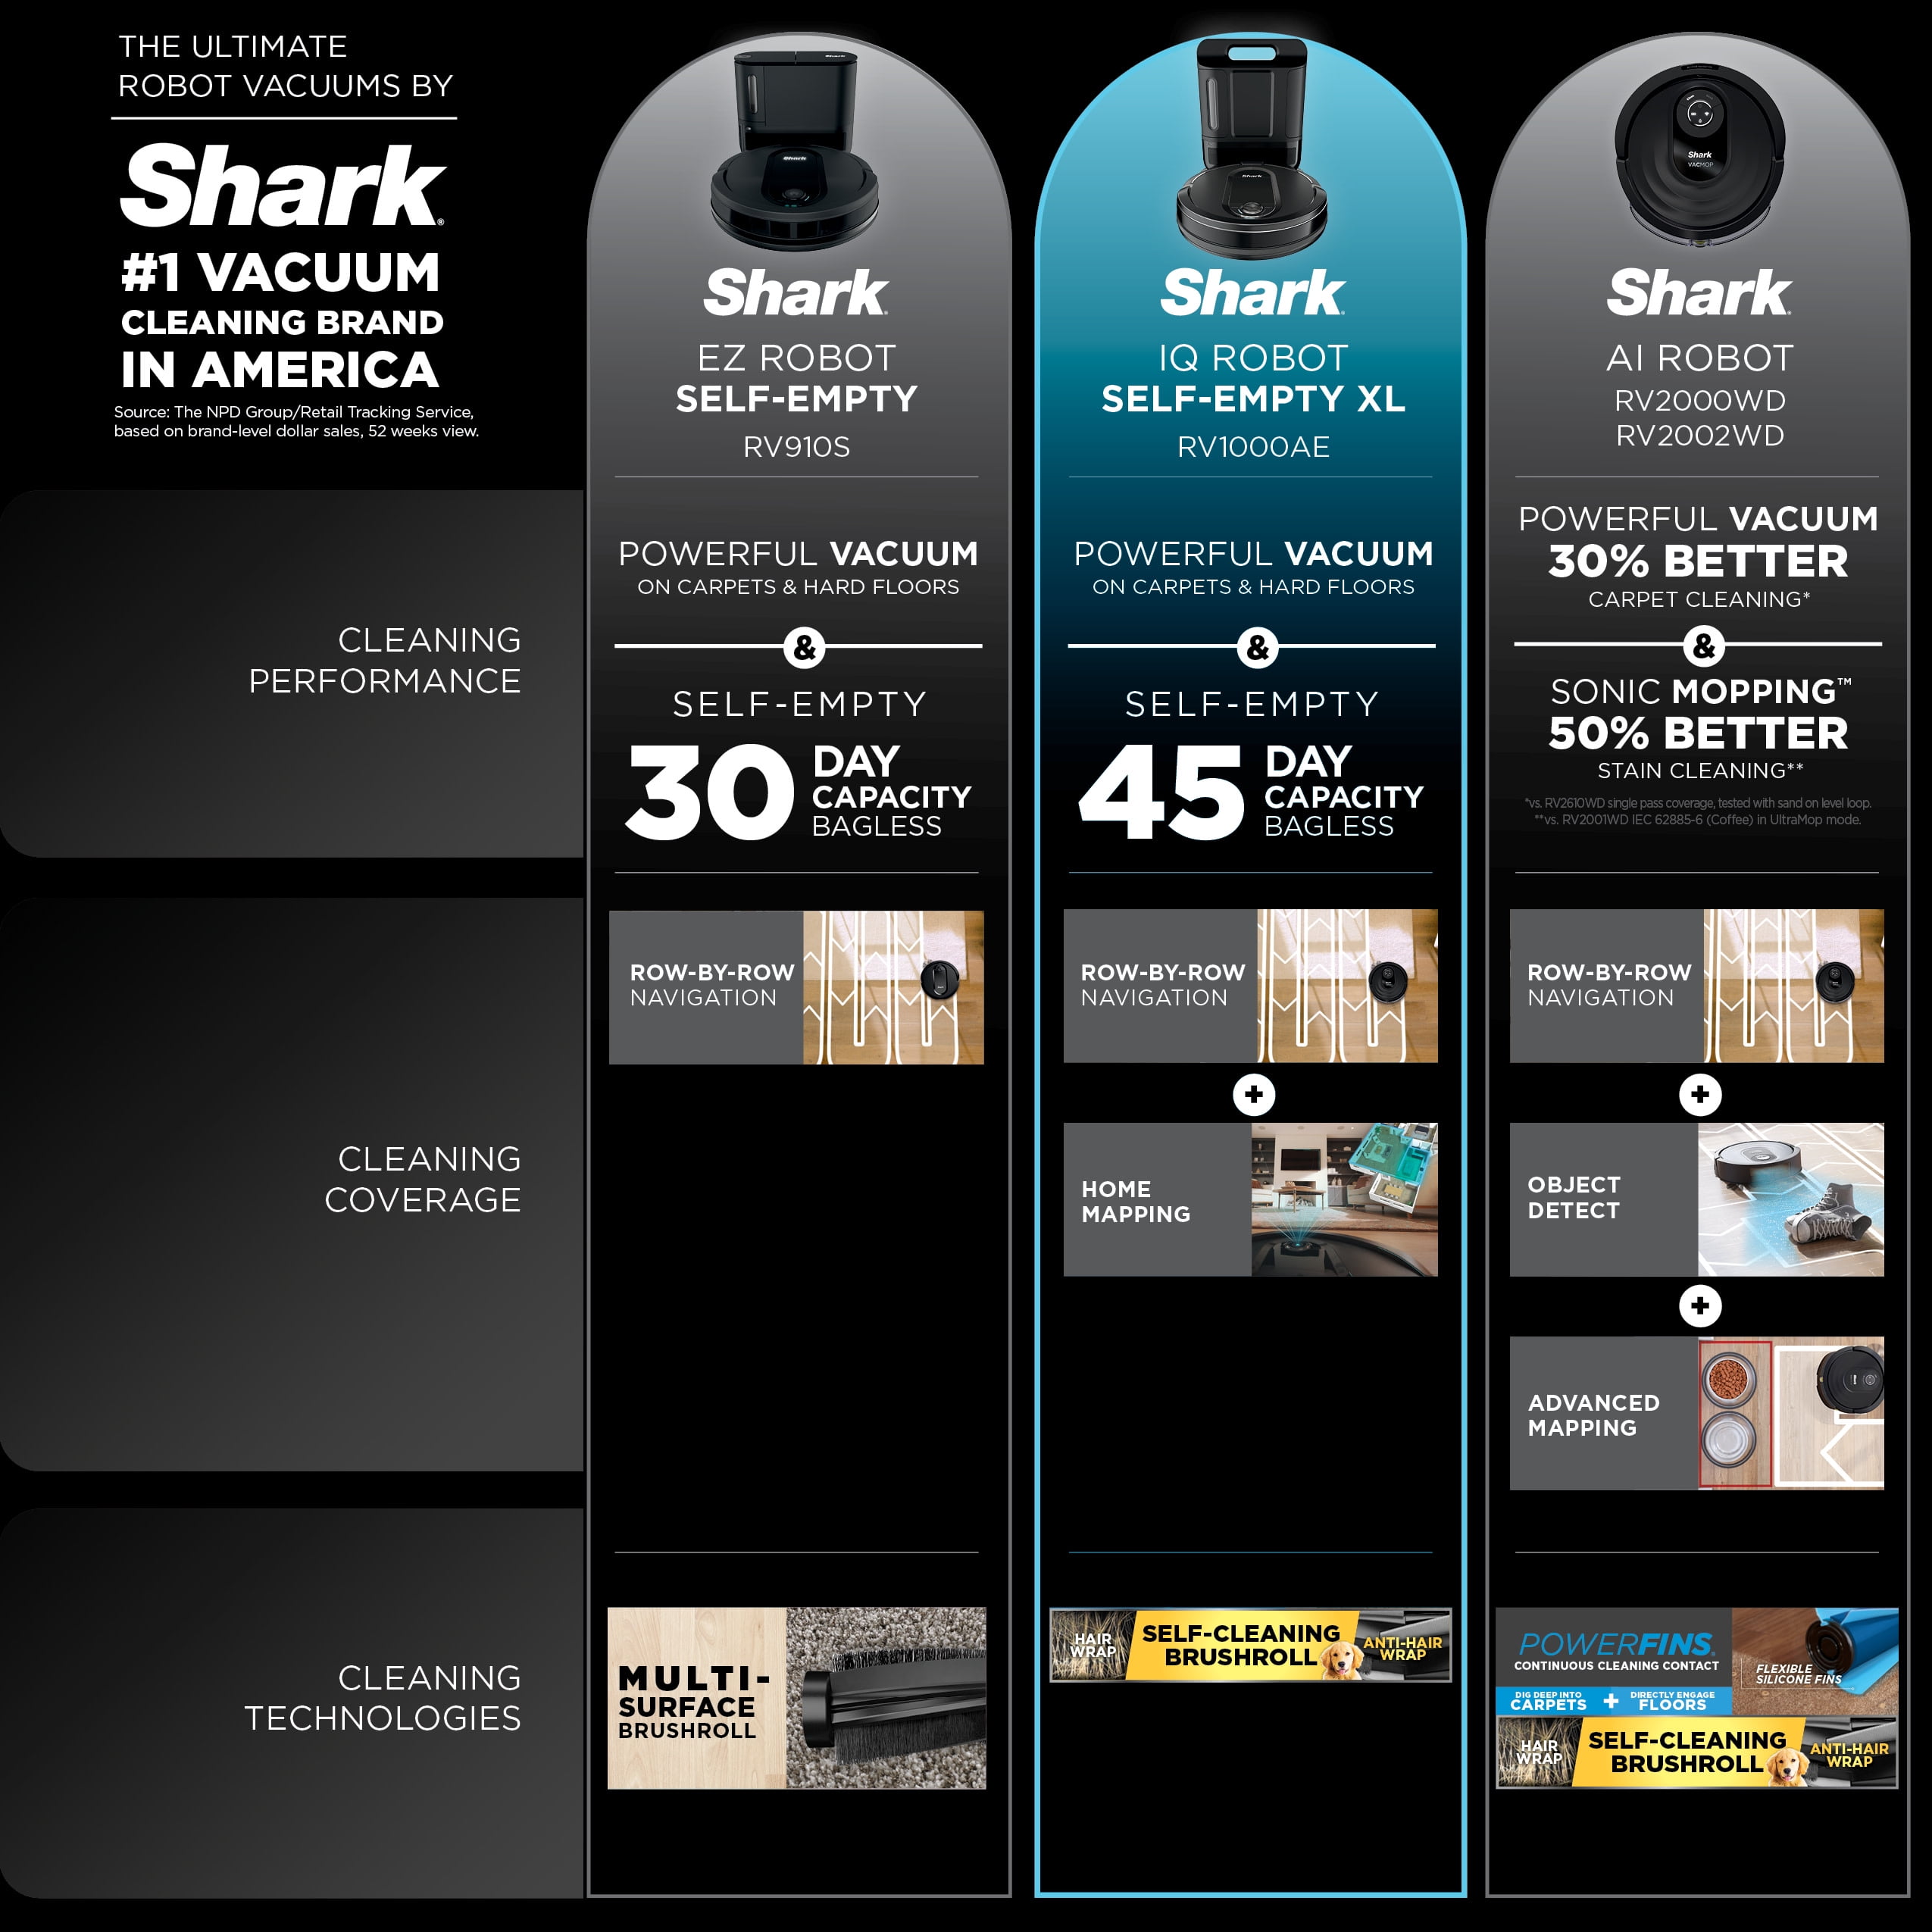 Shark IQ Robot Vacuum with XL Self-Empty Base, Home Mapping, Self-Cleaning  Brushroll, Wi-Fi, RV1000AE